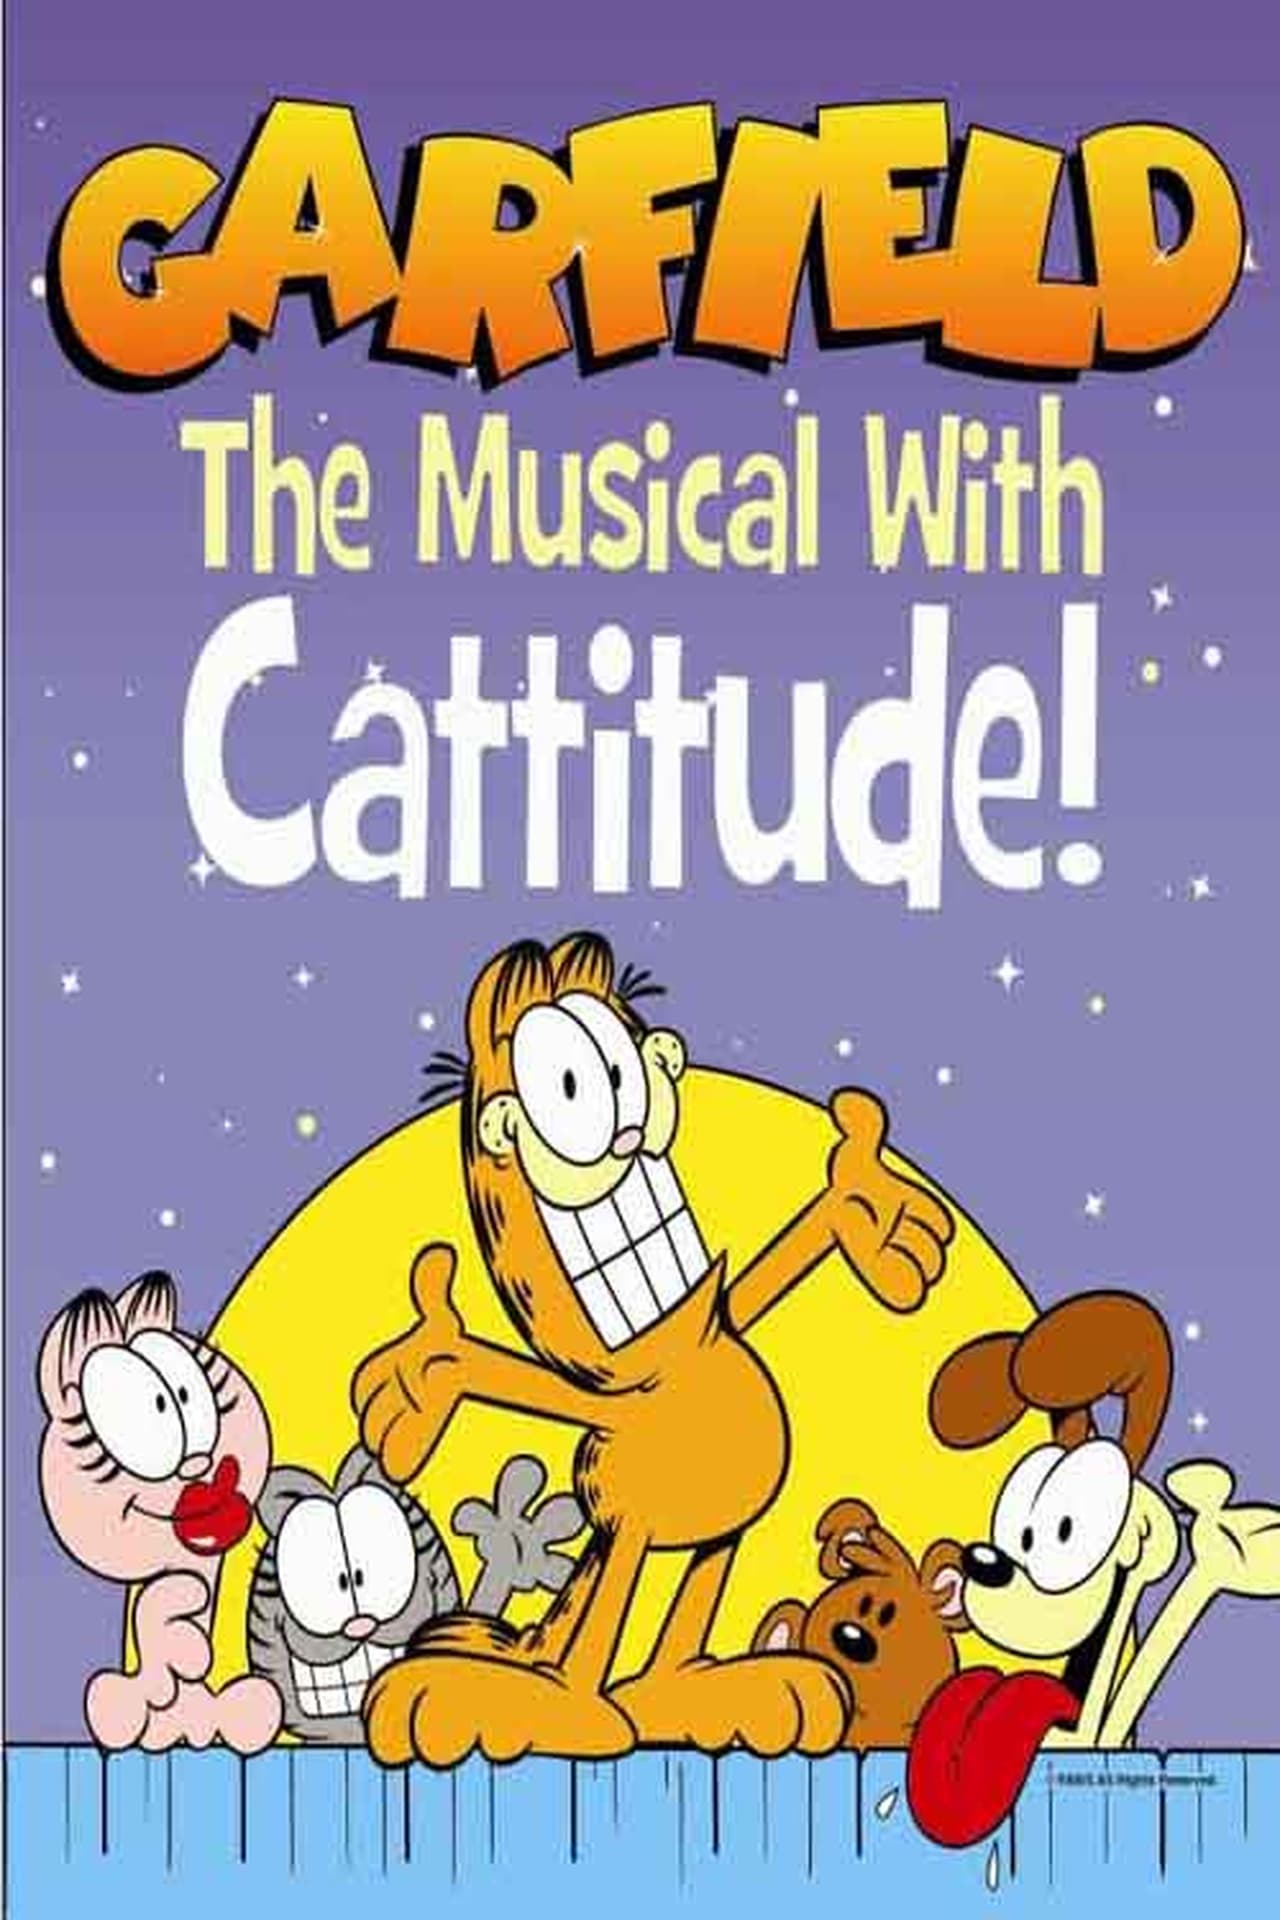 Garfeld: the Musical! (A Garfield Parody)